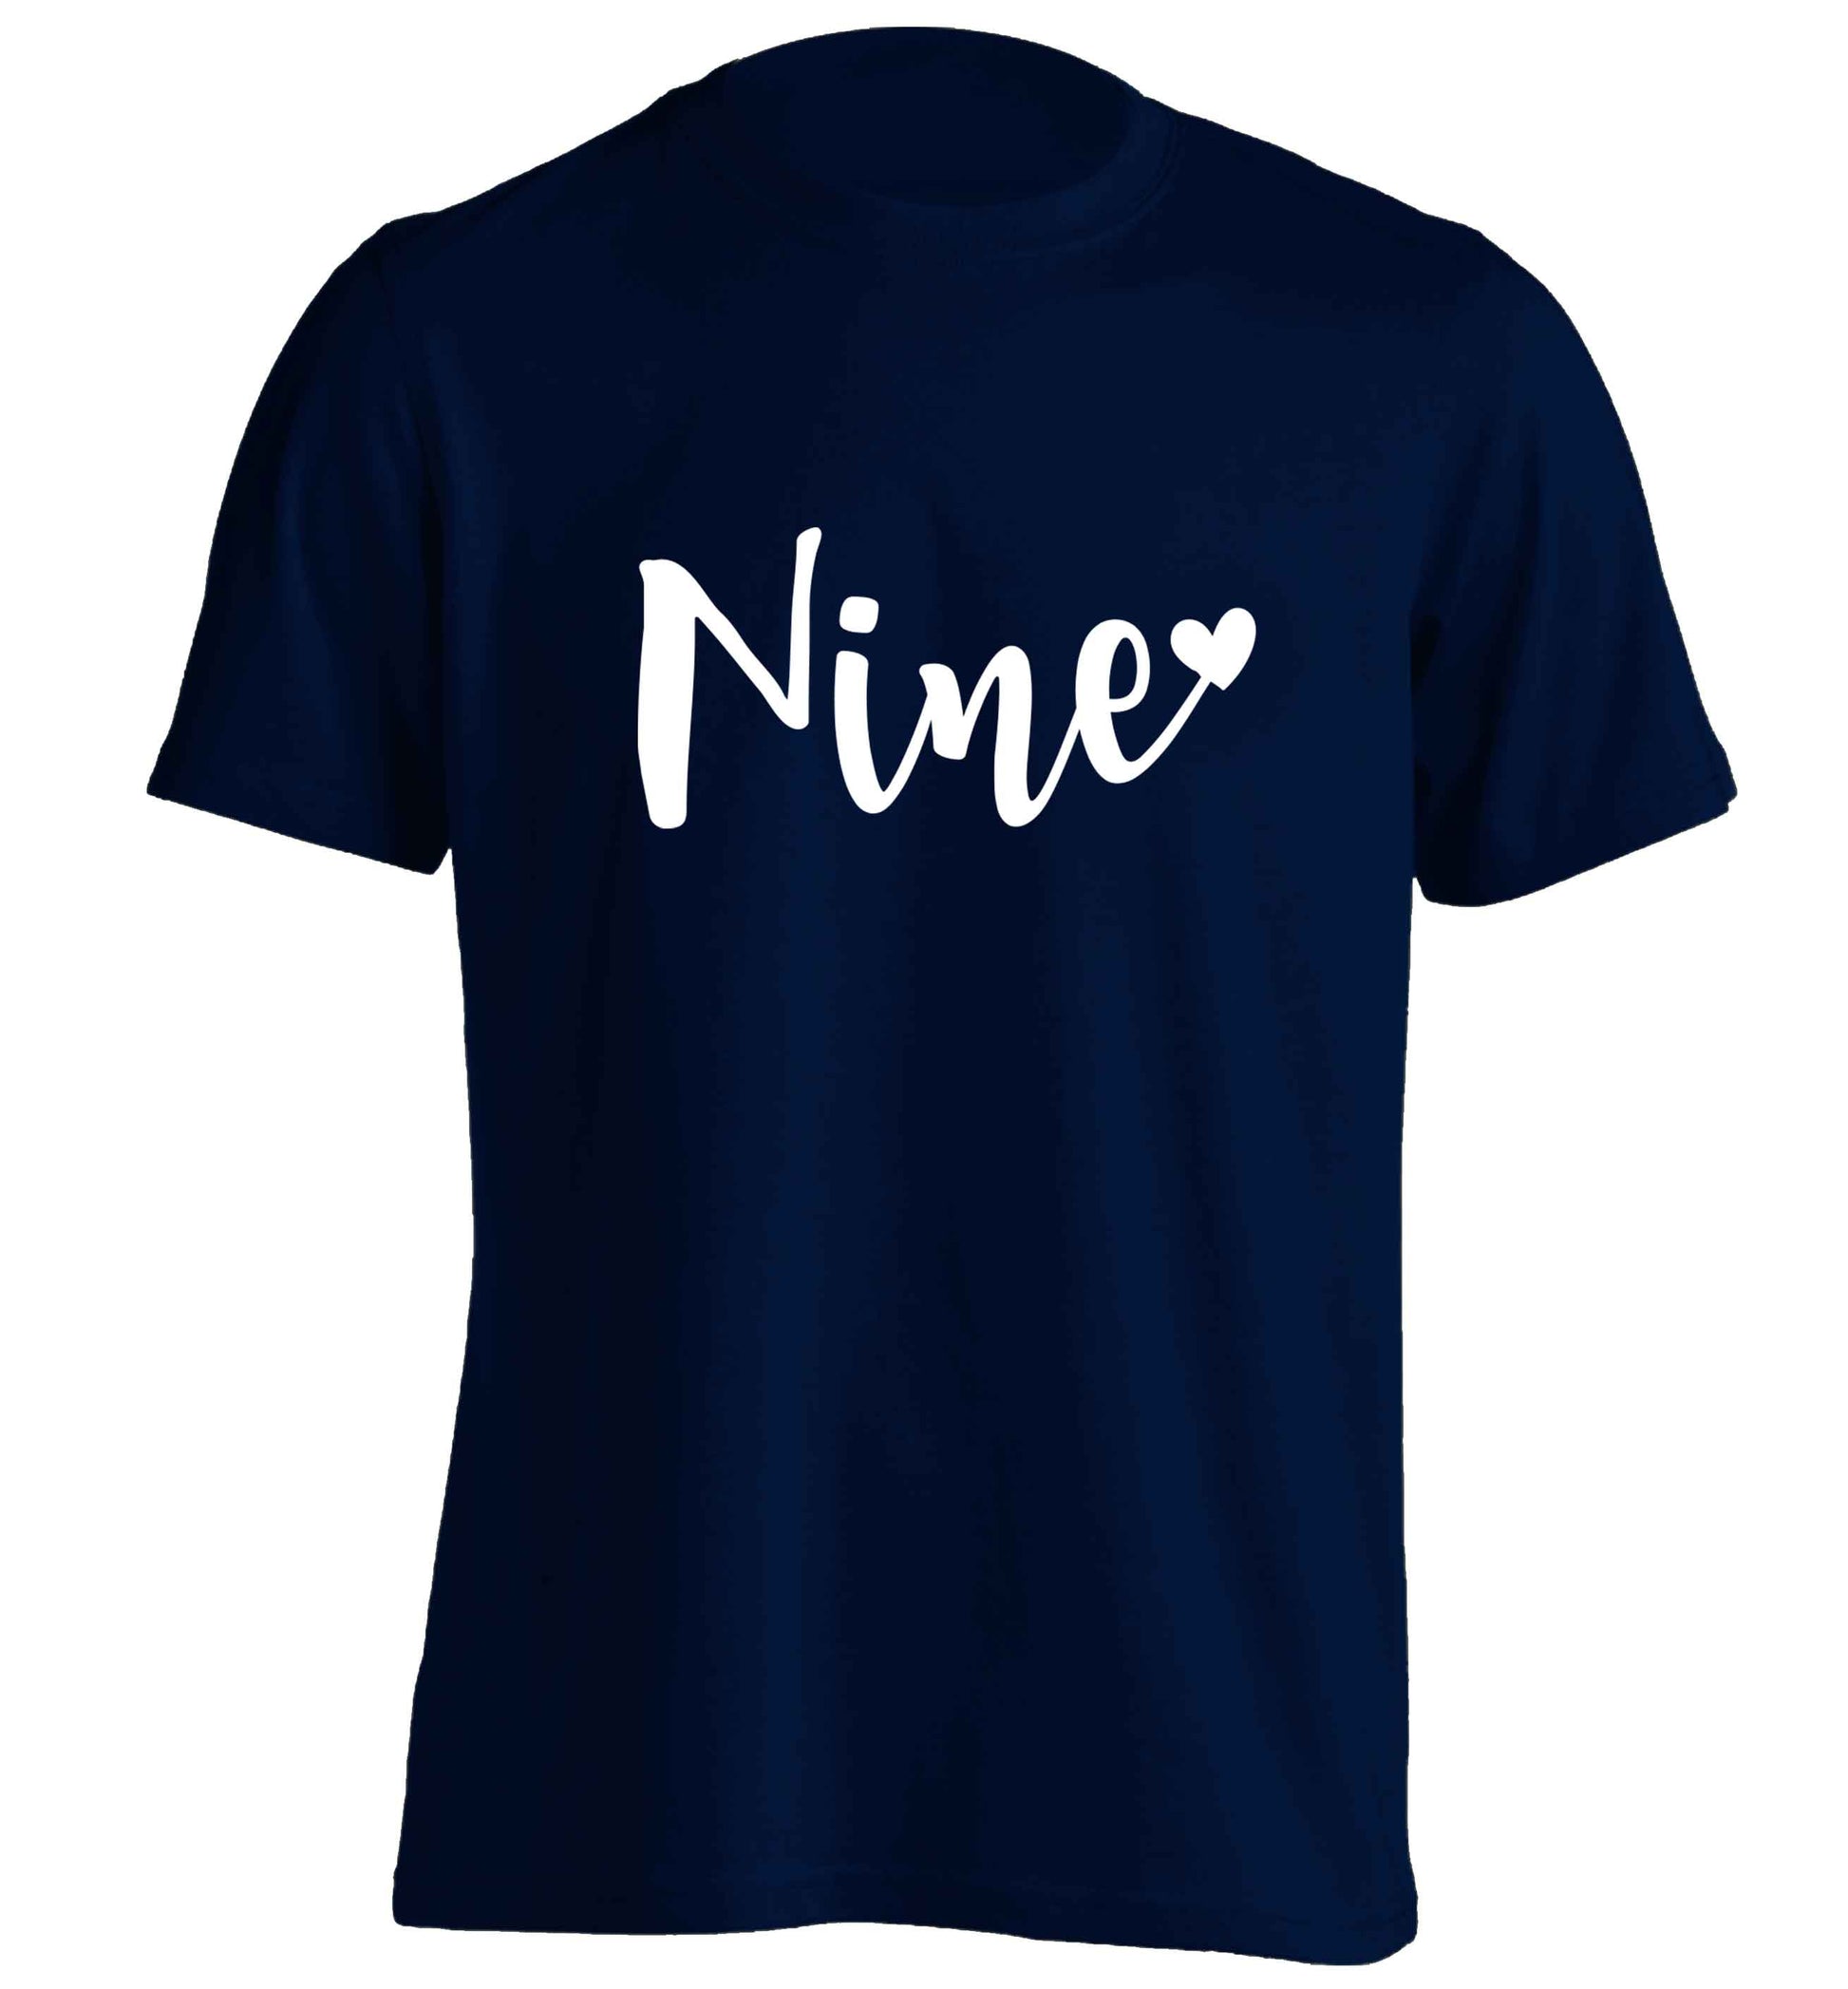 Nine and heart adults unisex navy Tshirt 2XL